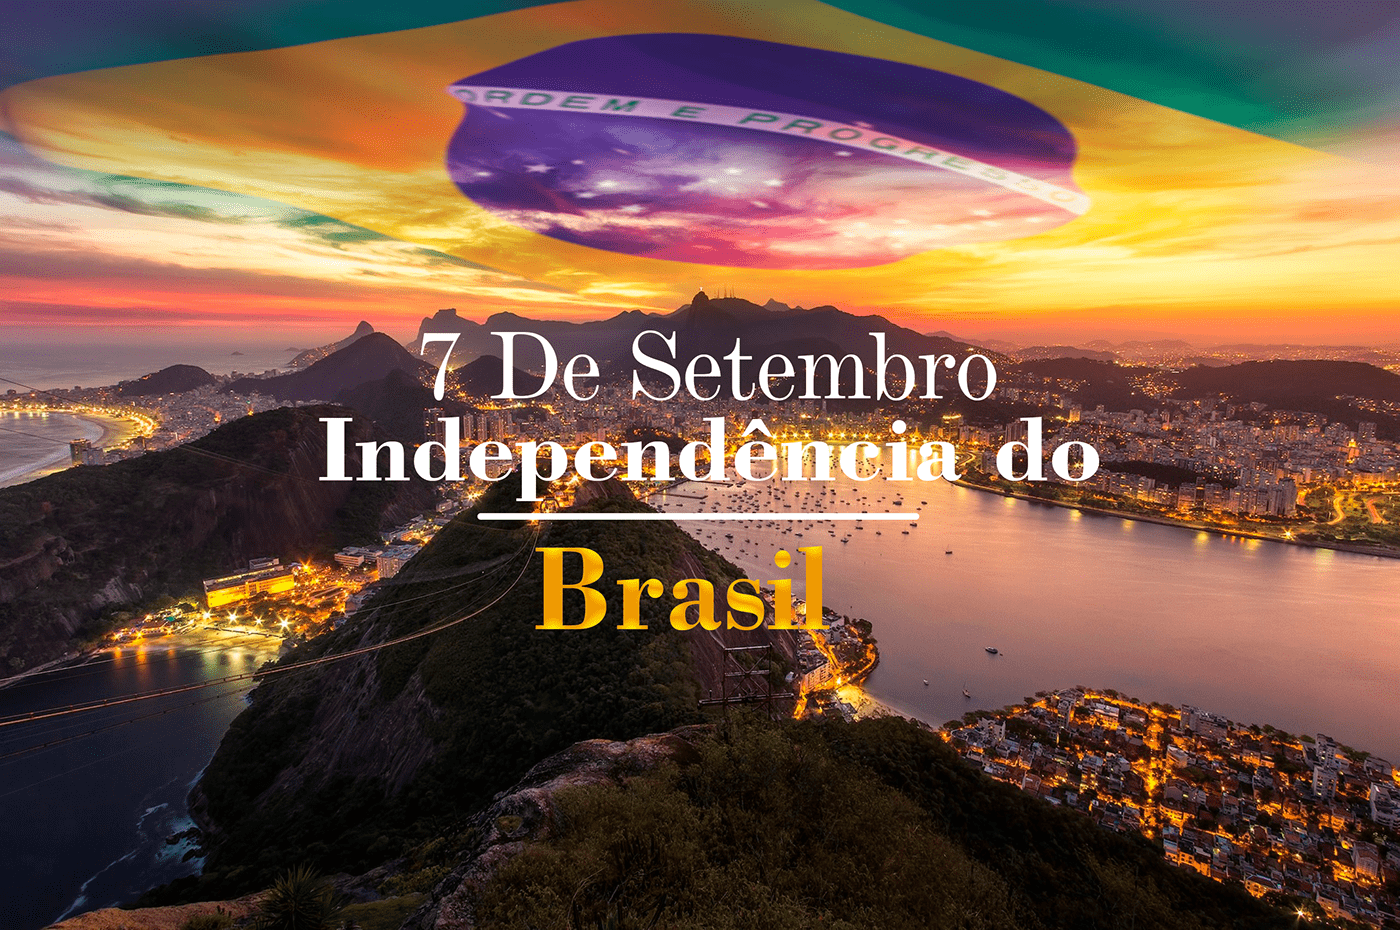  Independência do Brasil 7 de setembro Brasil